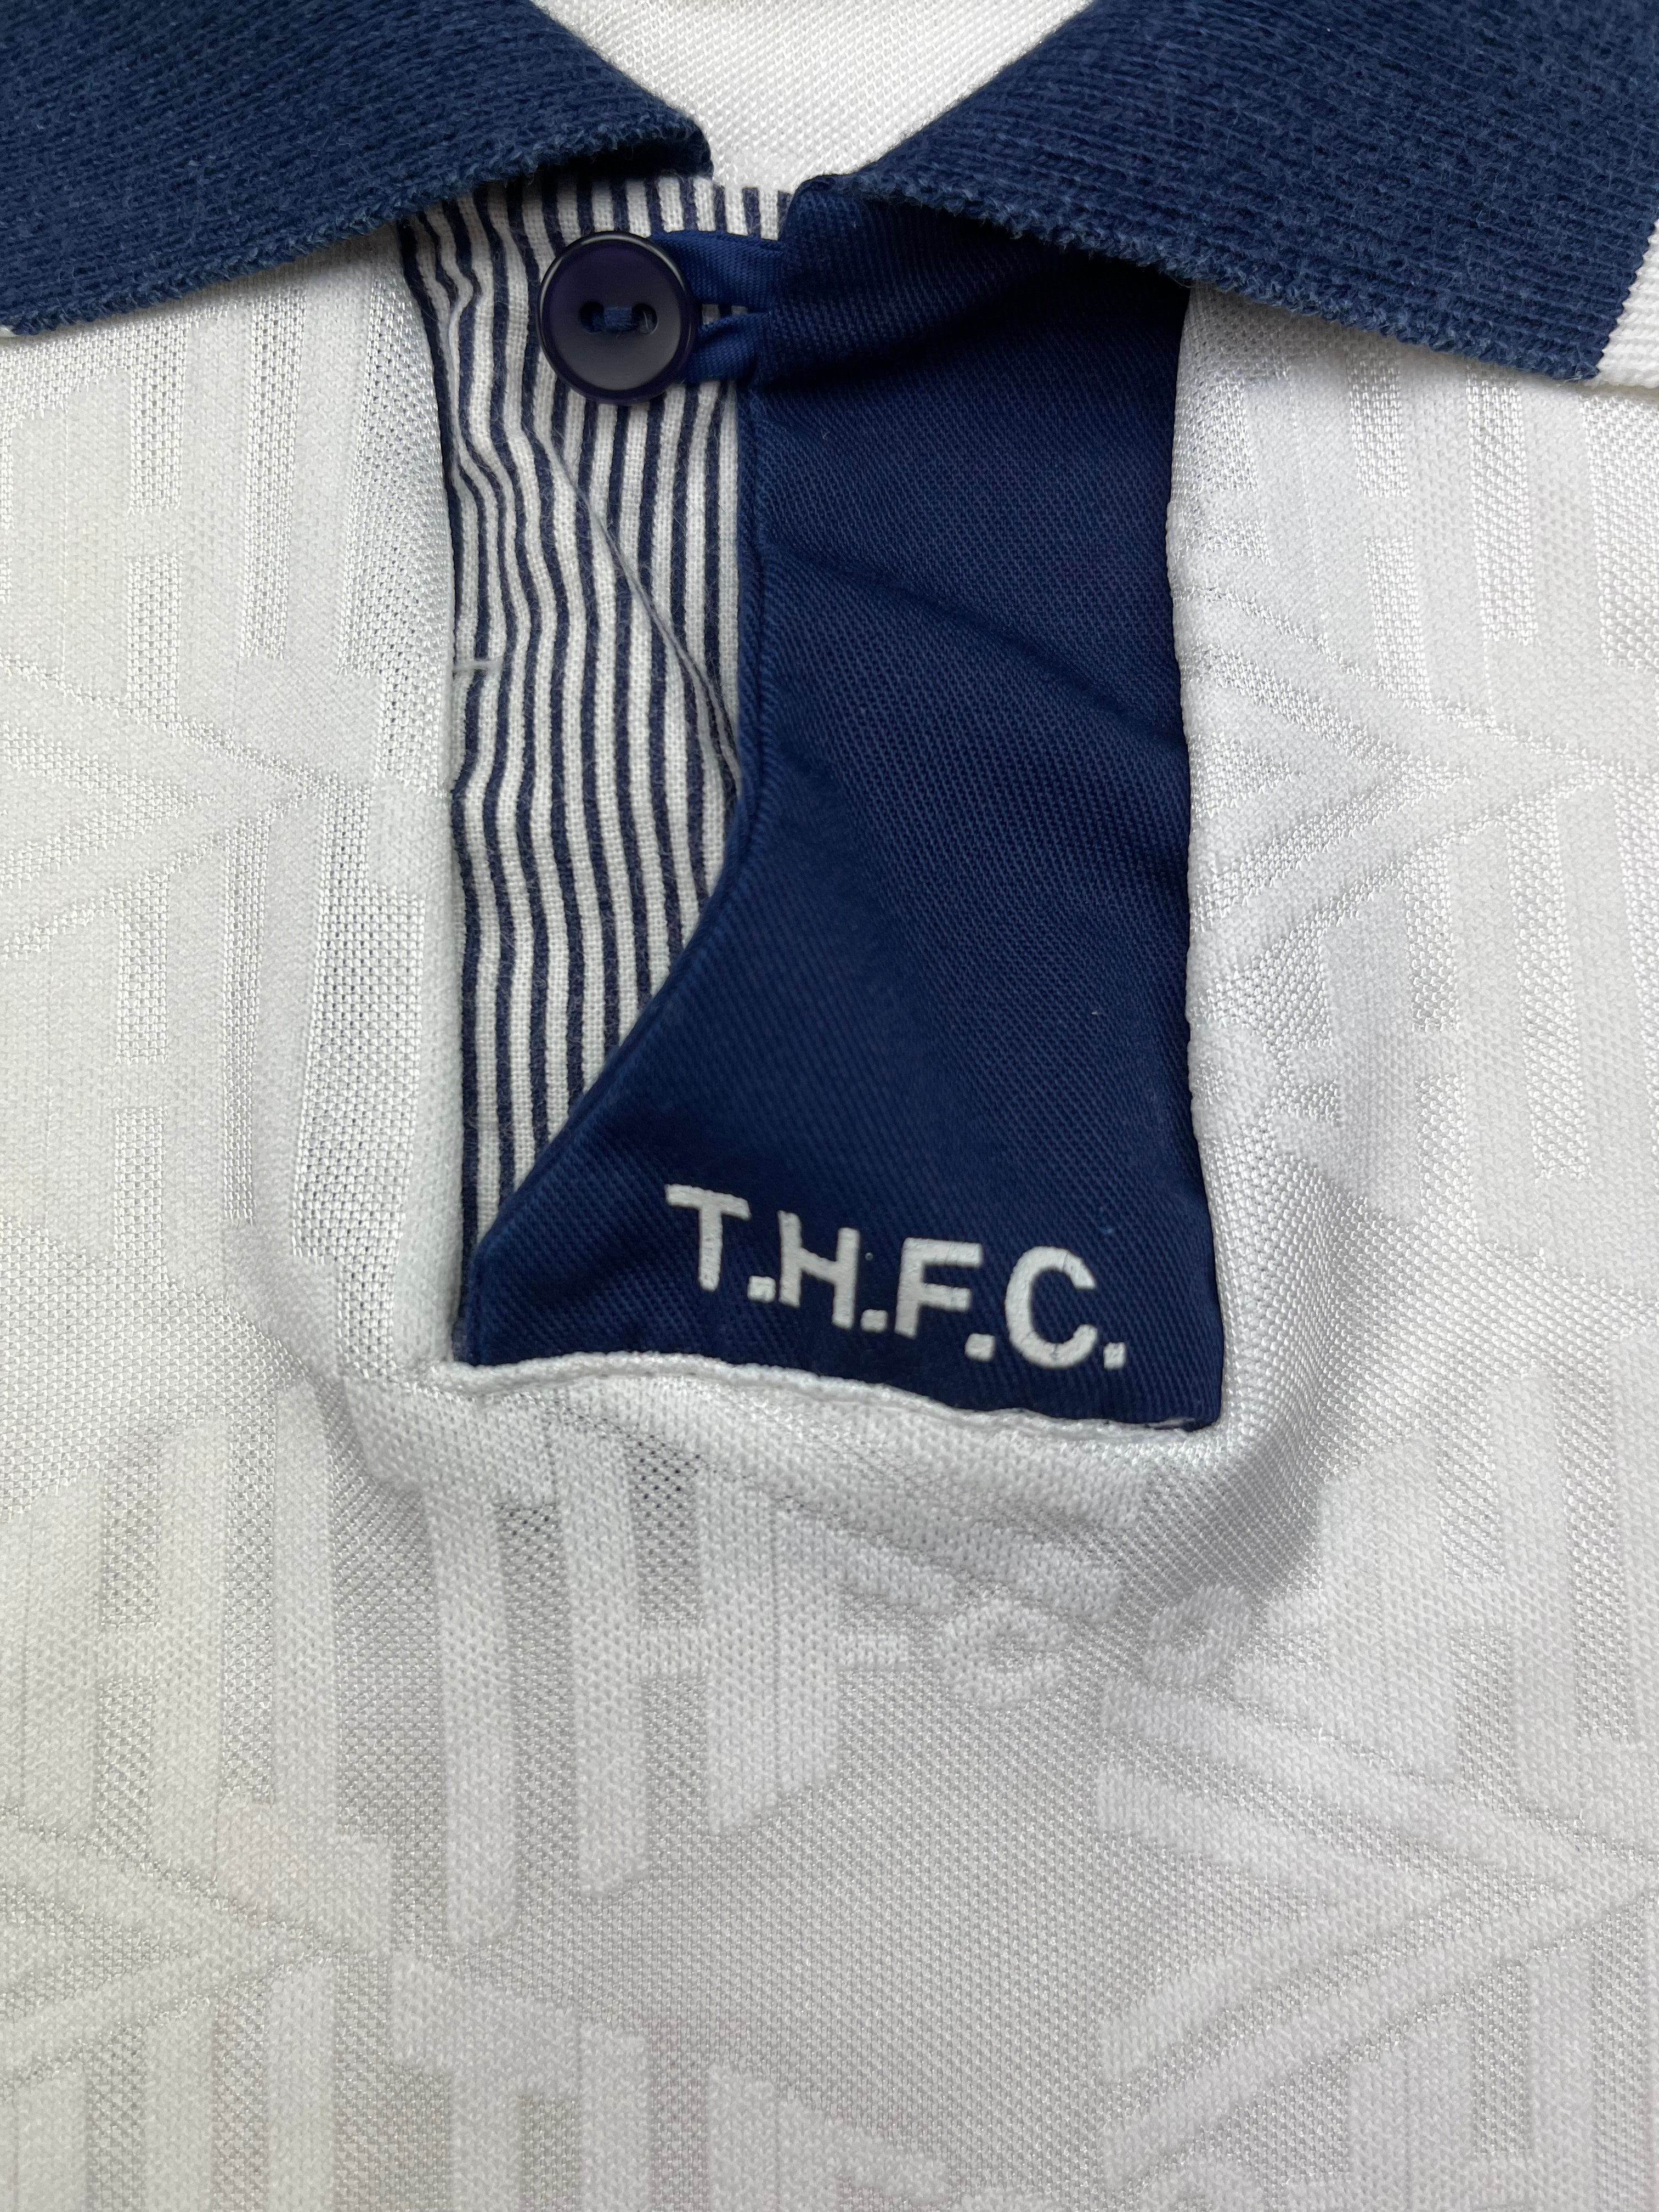 1991/93 Tottenham Hotspur Home Shirt (S) 9/10